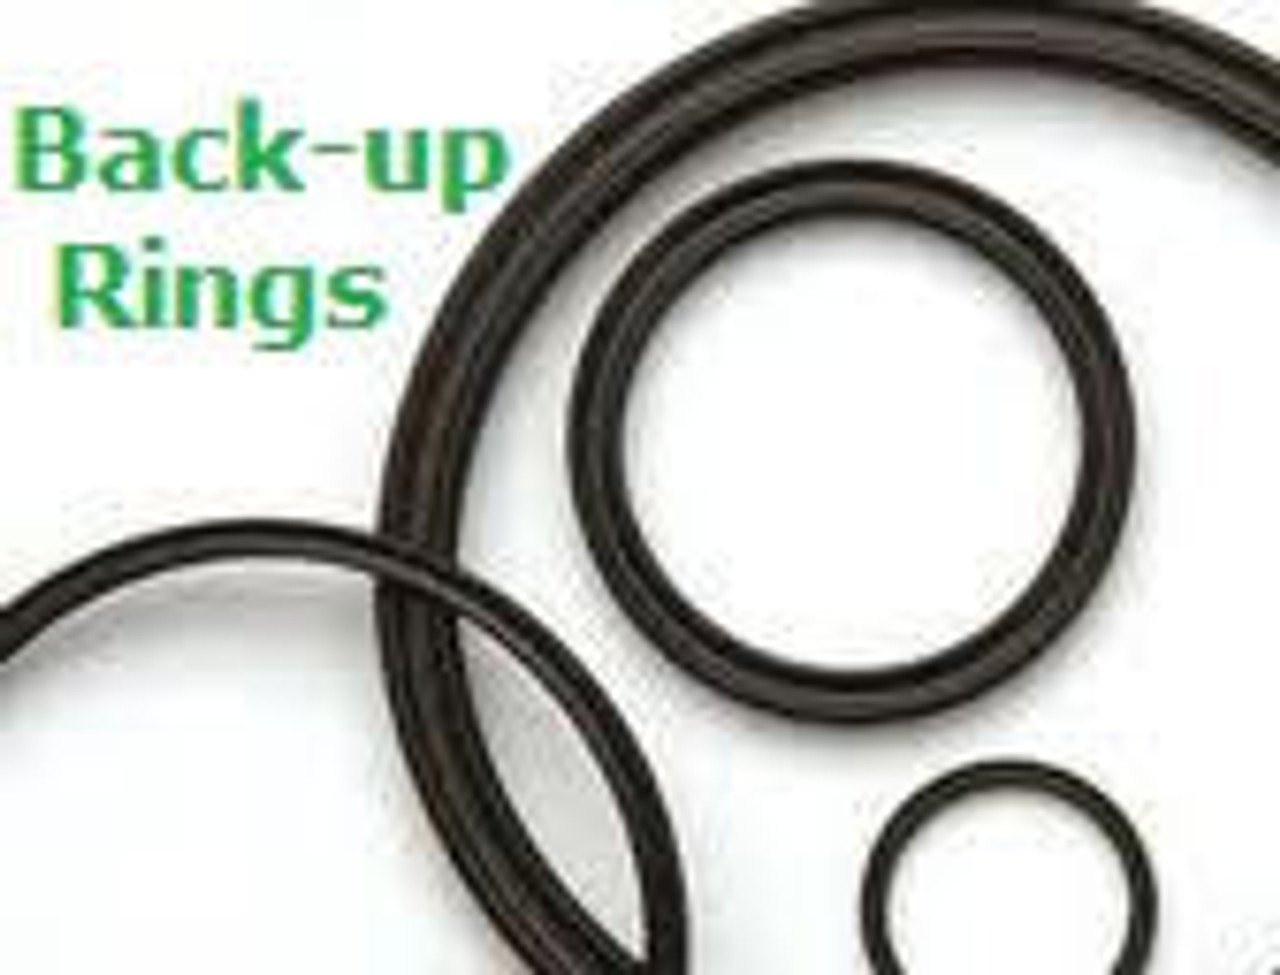 Backup Rings  Buna Size 174 Price for 1 pc